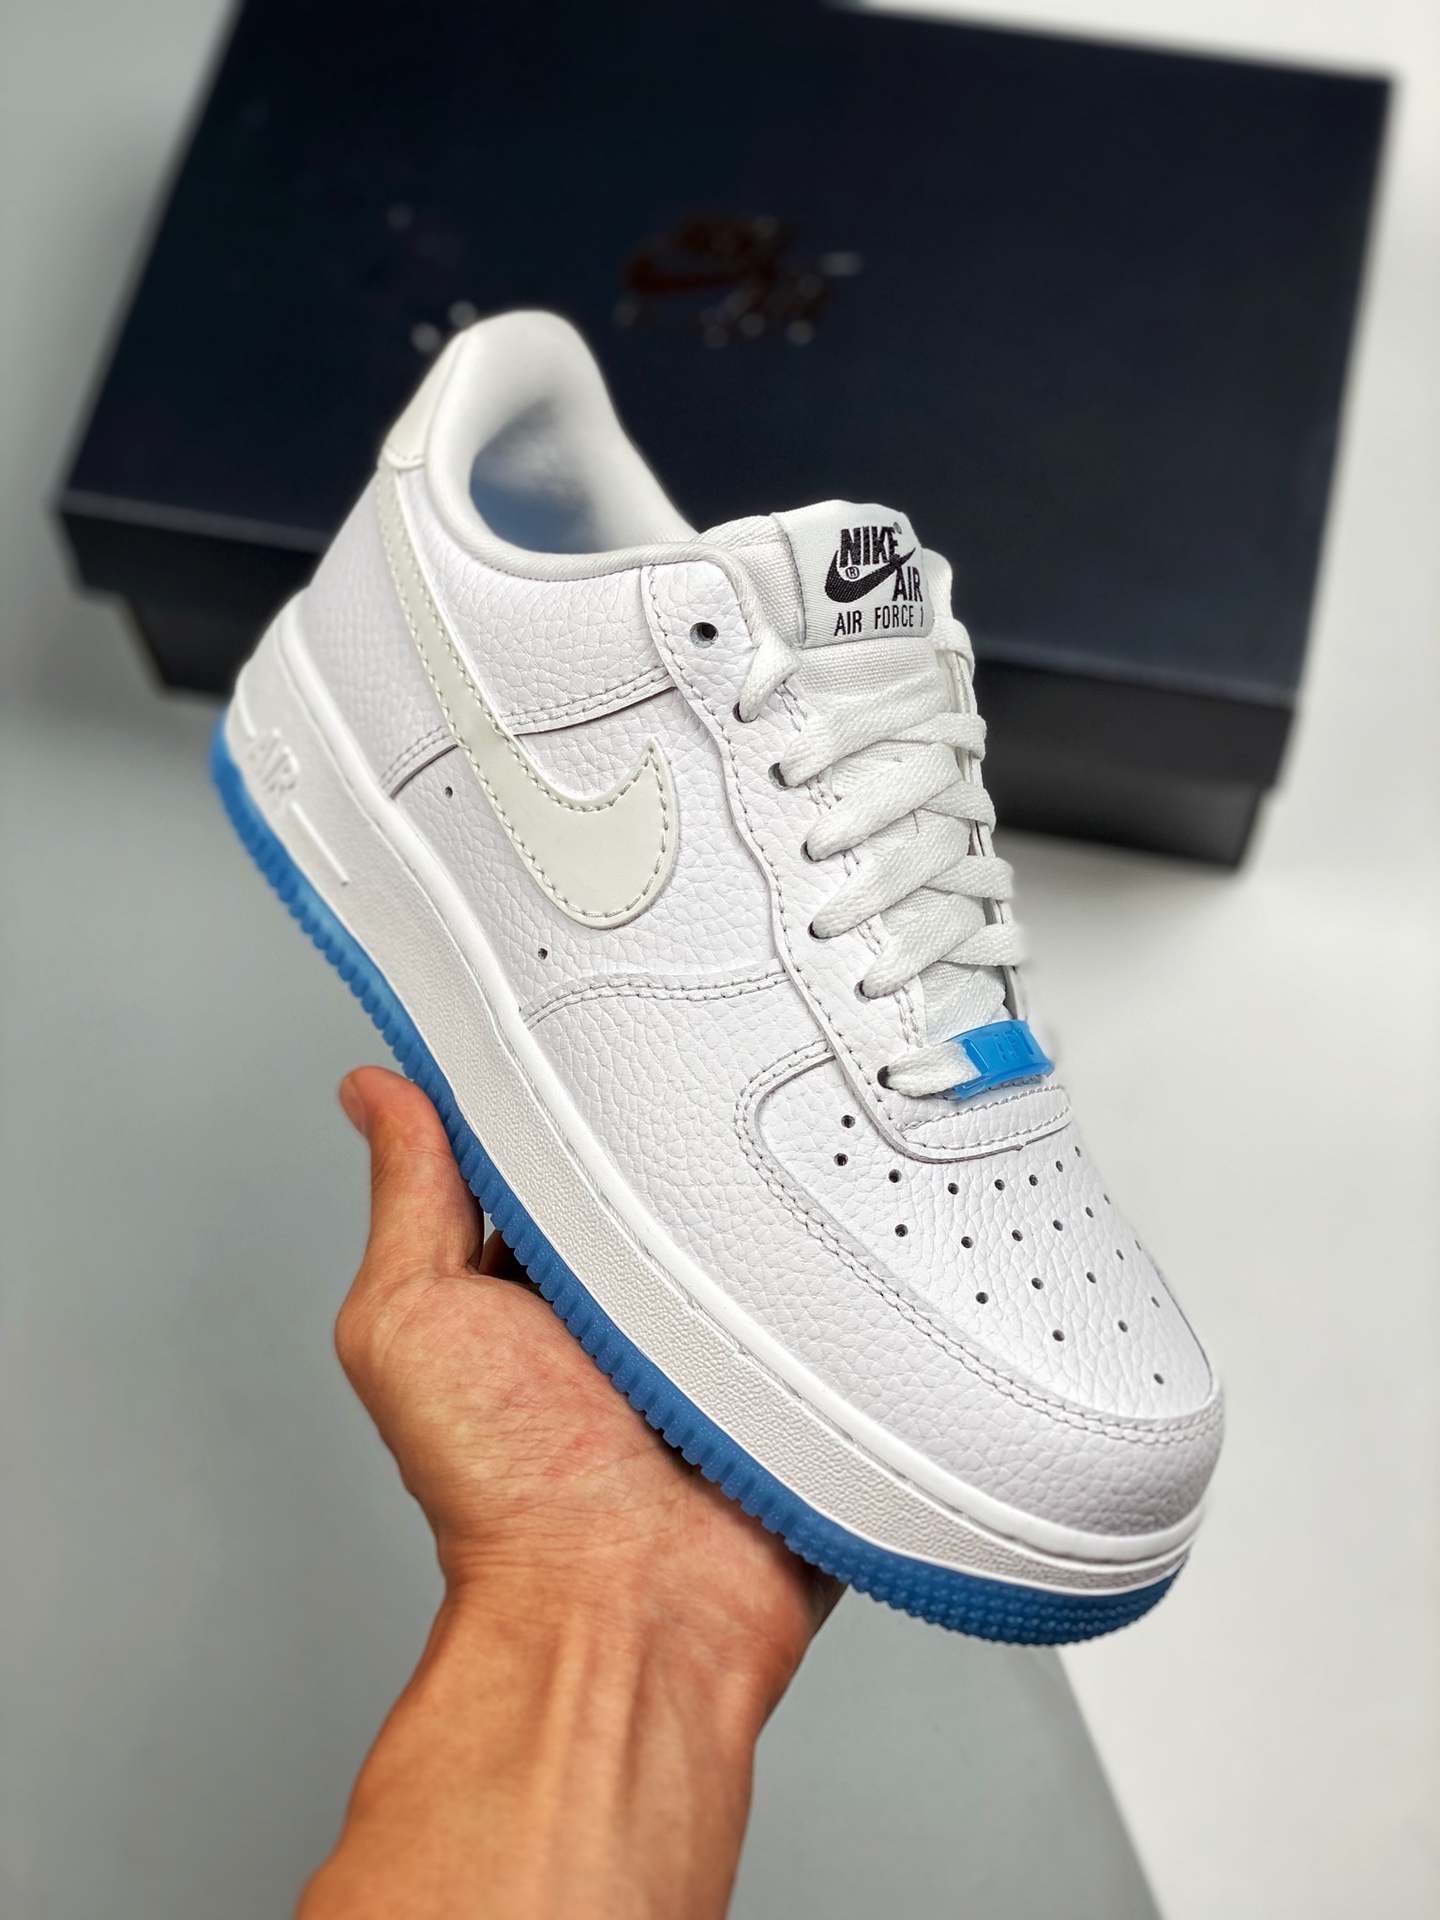 Nike Air Force 1 Low âUVâ White University Blue For Sale â Sneaker Hello